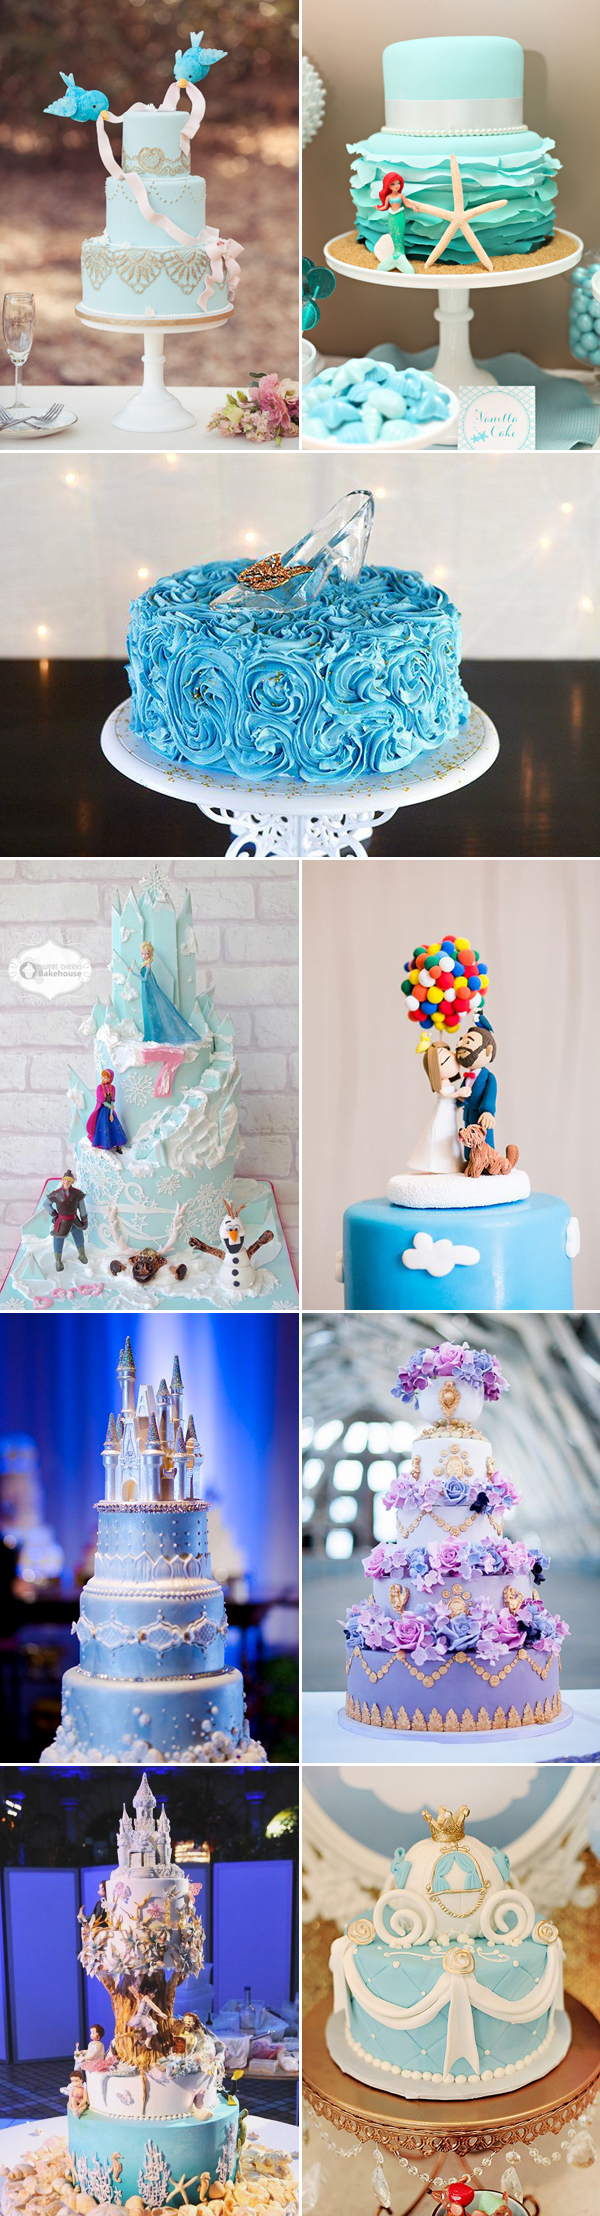 Disney-Inspired Wedding Cakes